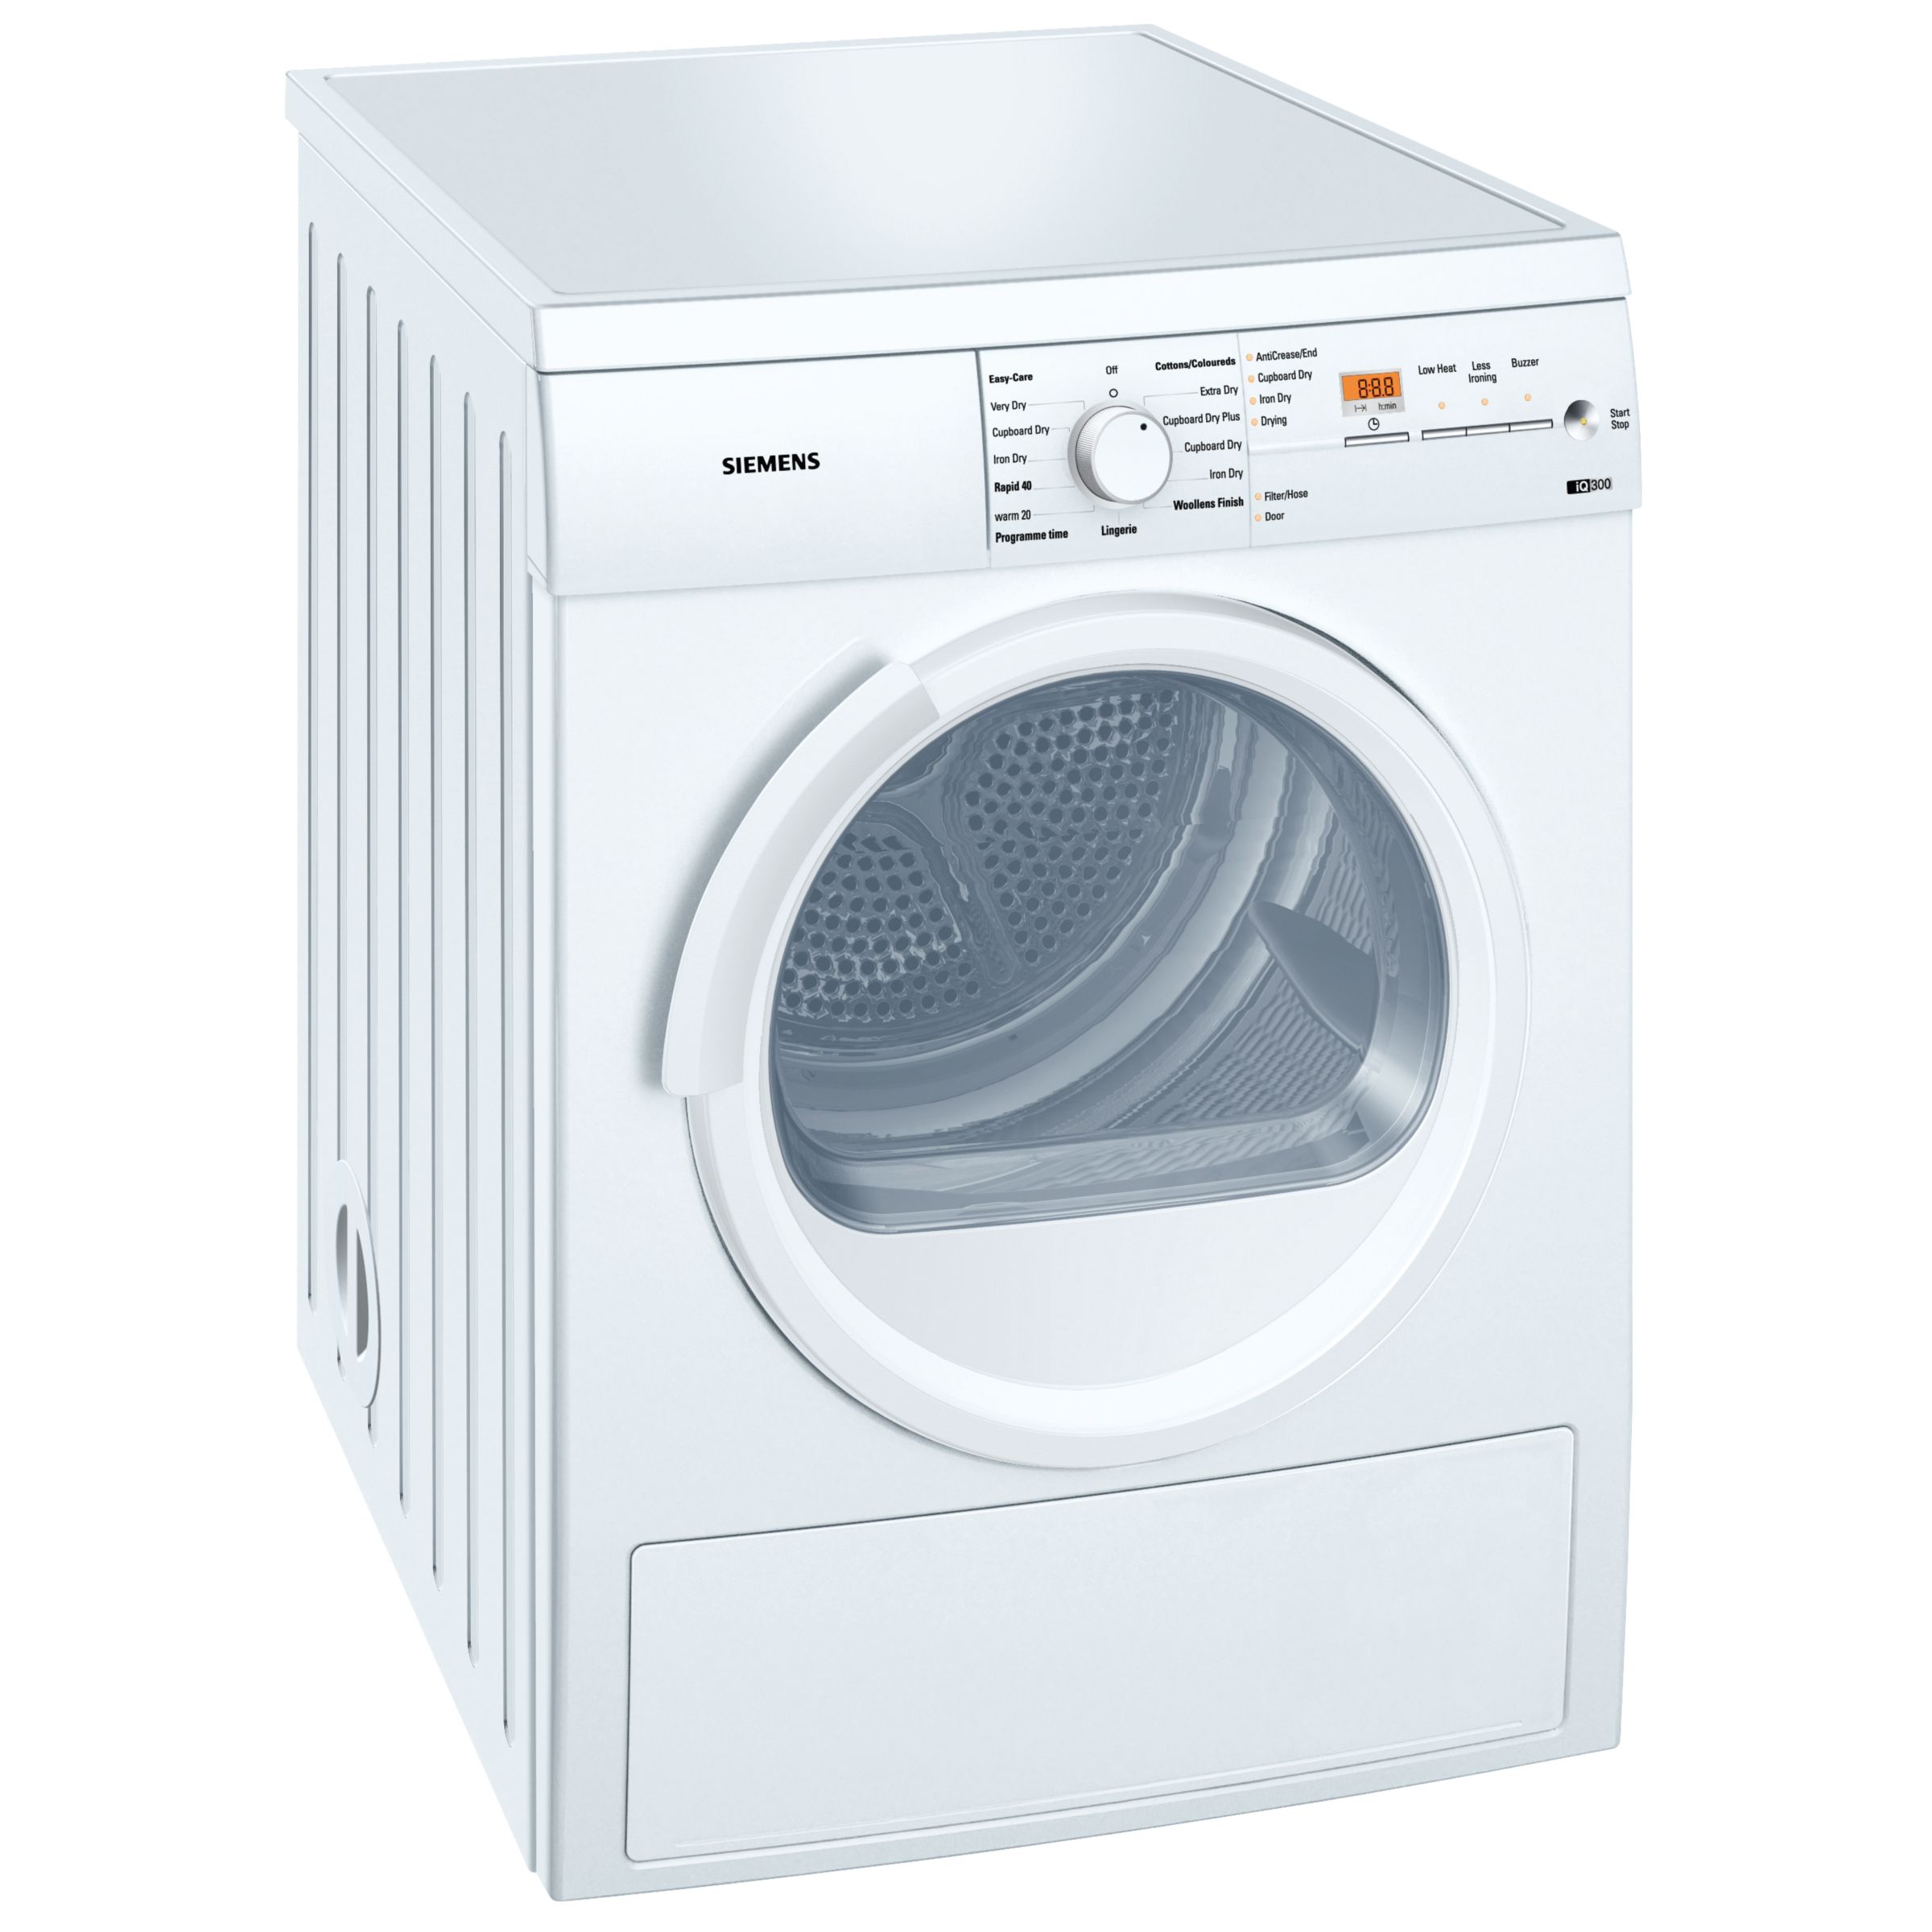 Siemens WT36V394GB Vented Tumble Dryer, White at JohnLewis